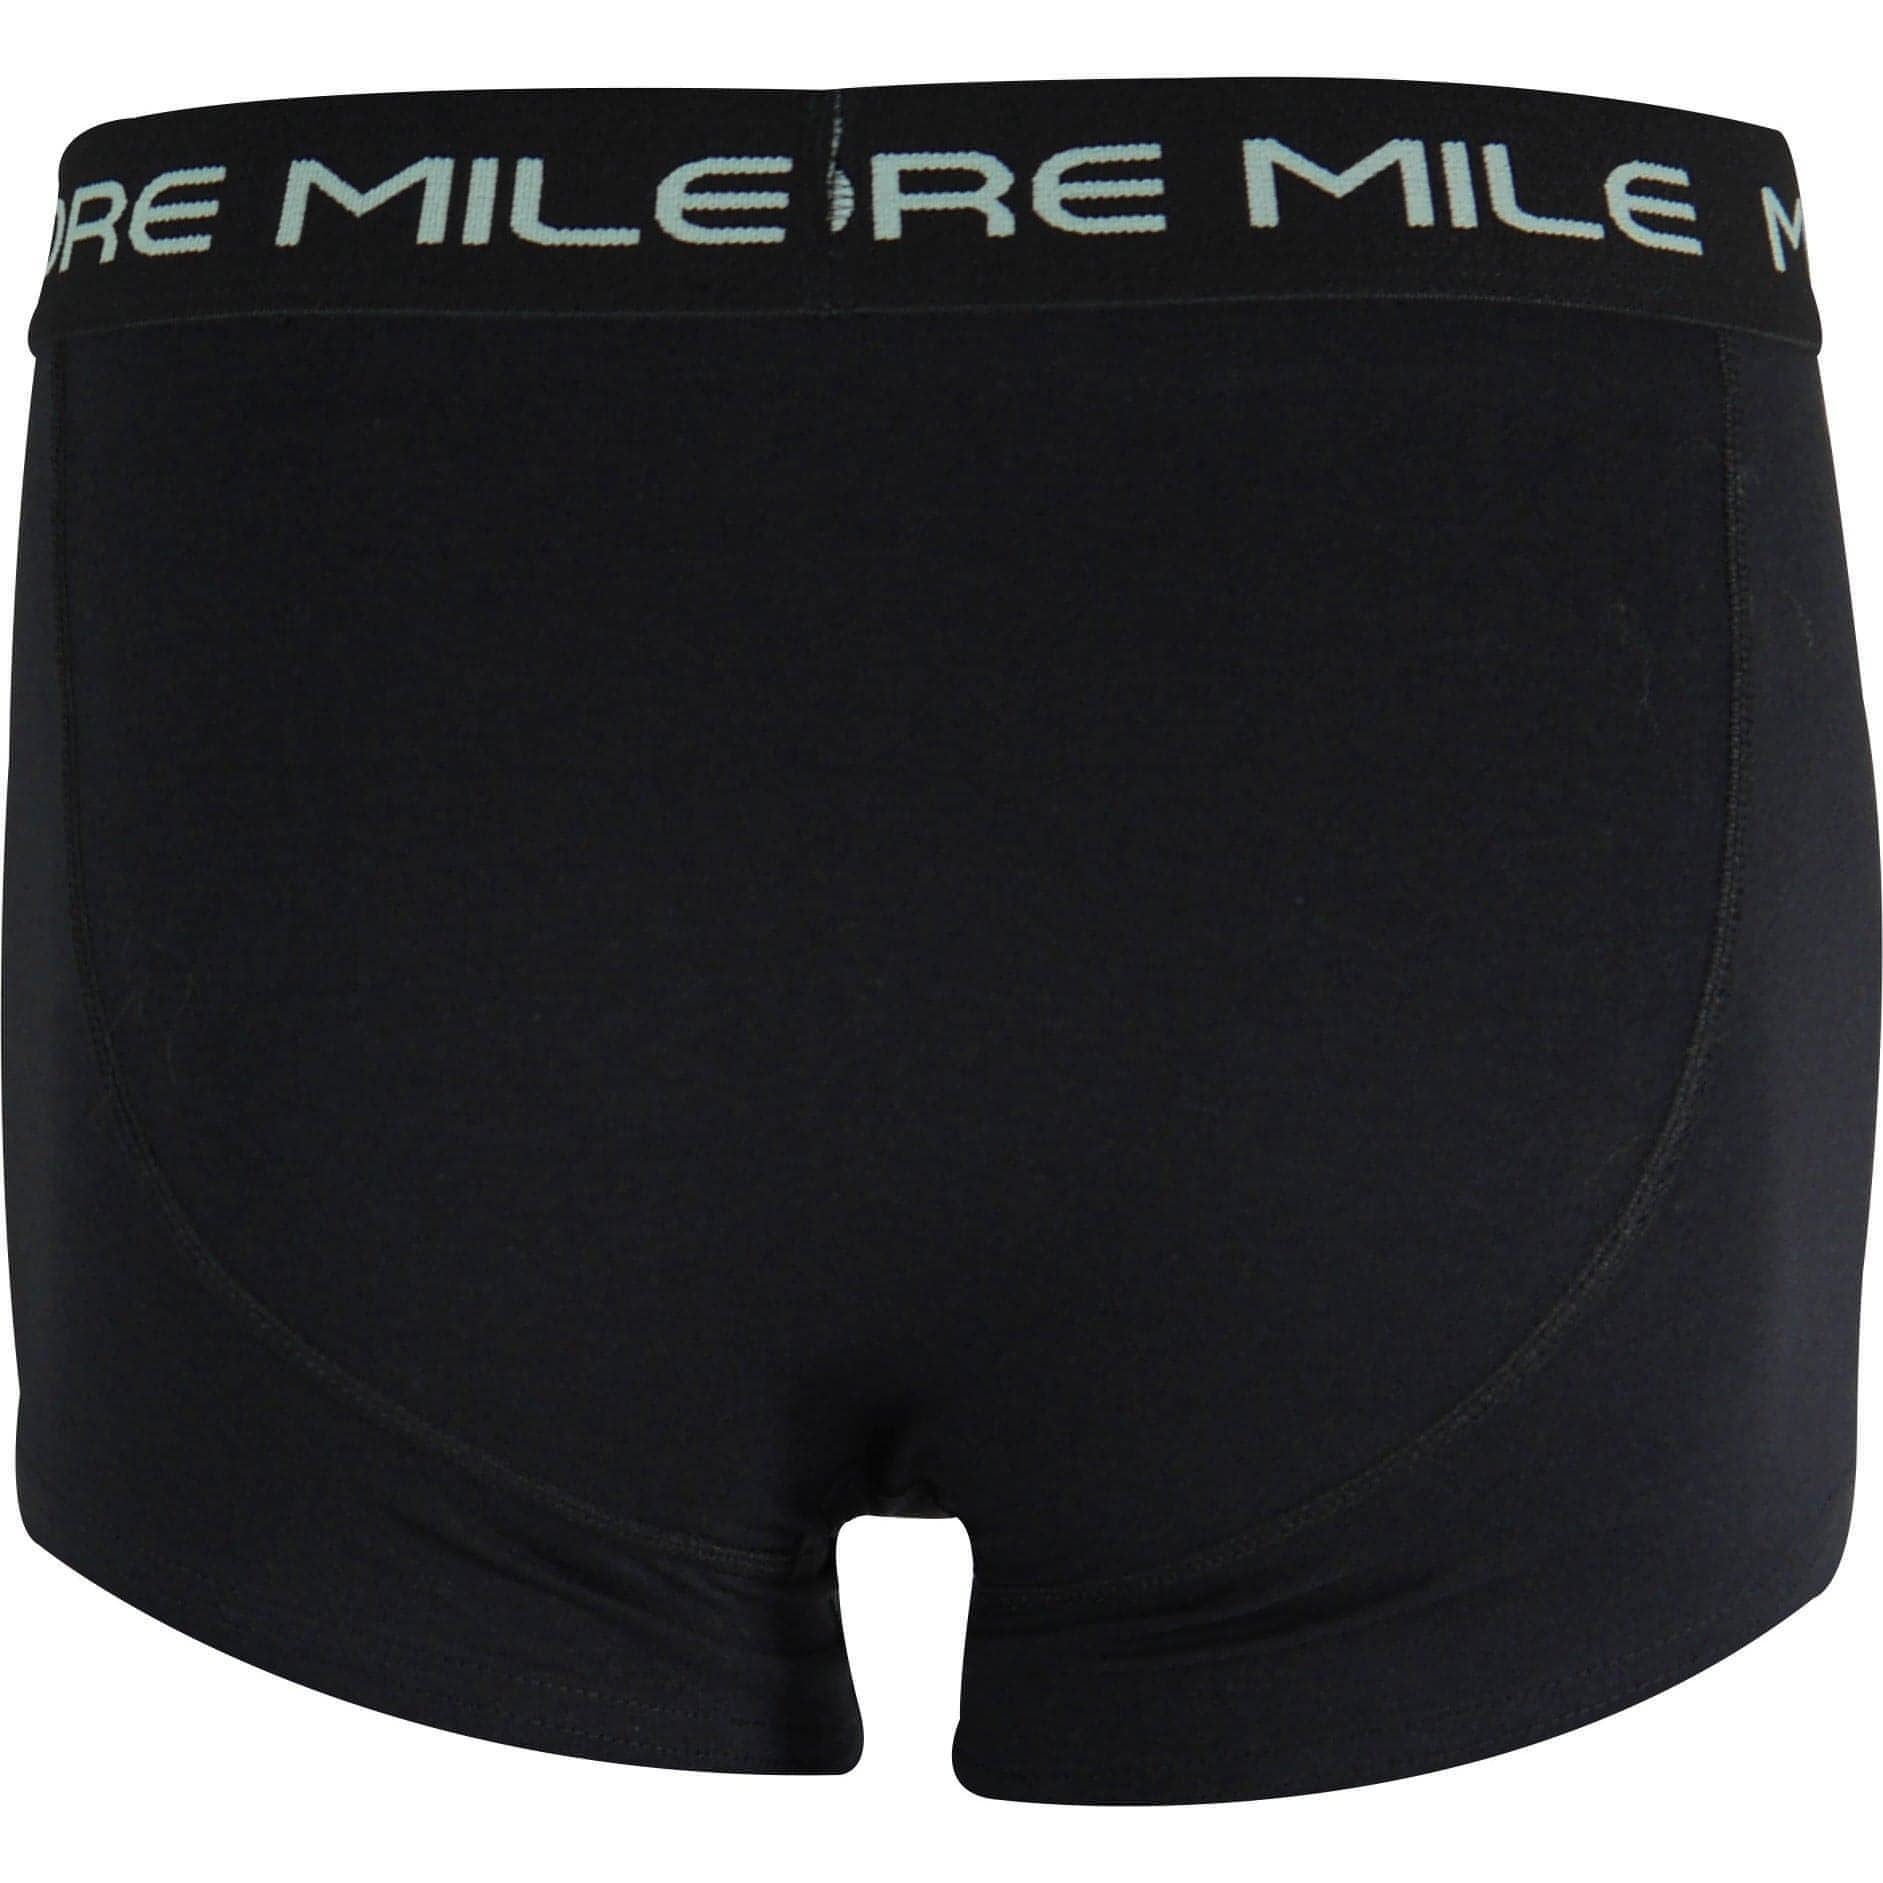 More Mile Classic (2 Pack) Mens Boxer Shorts - Black – Start Fitness